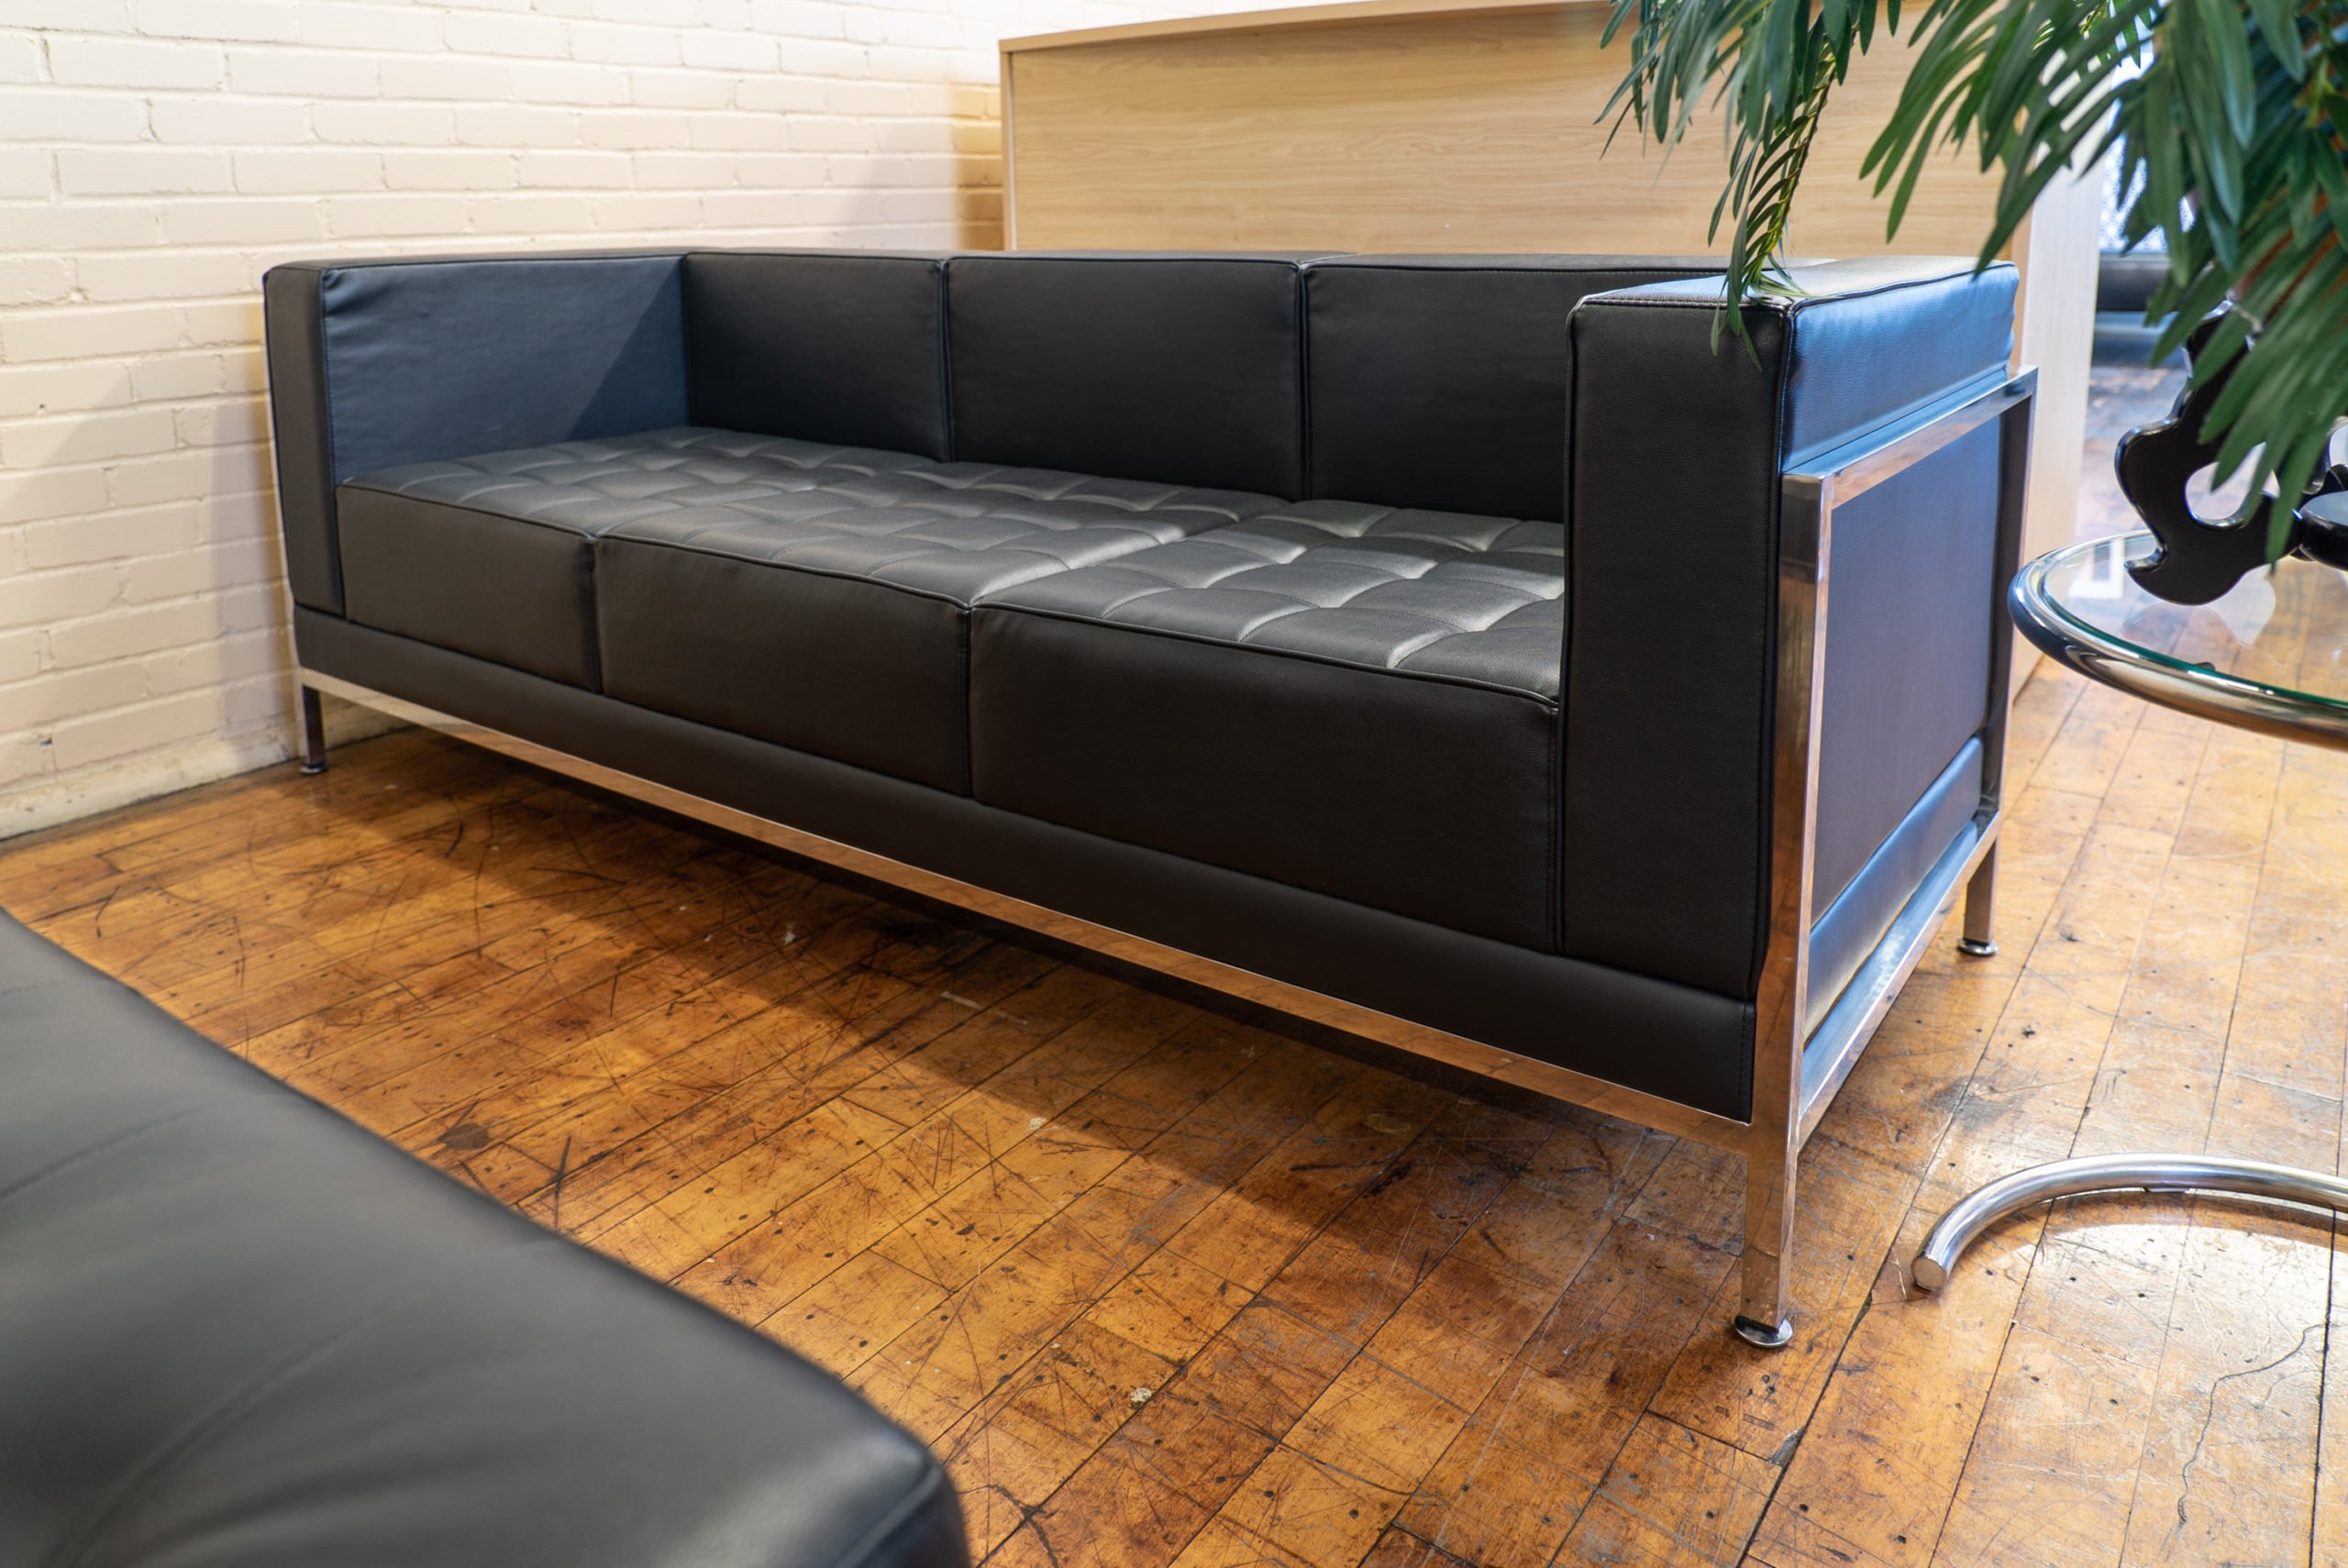 sofa black leather fix